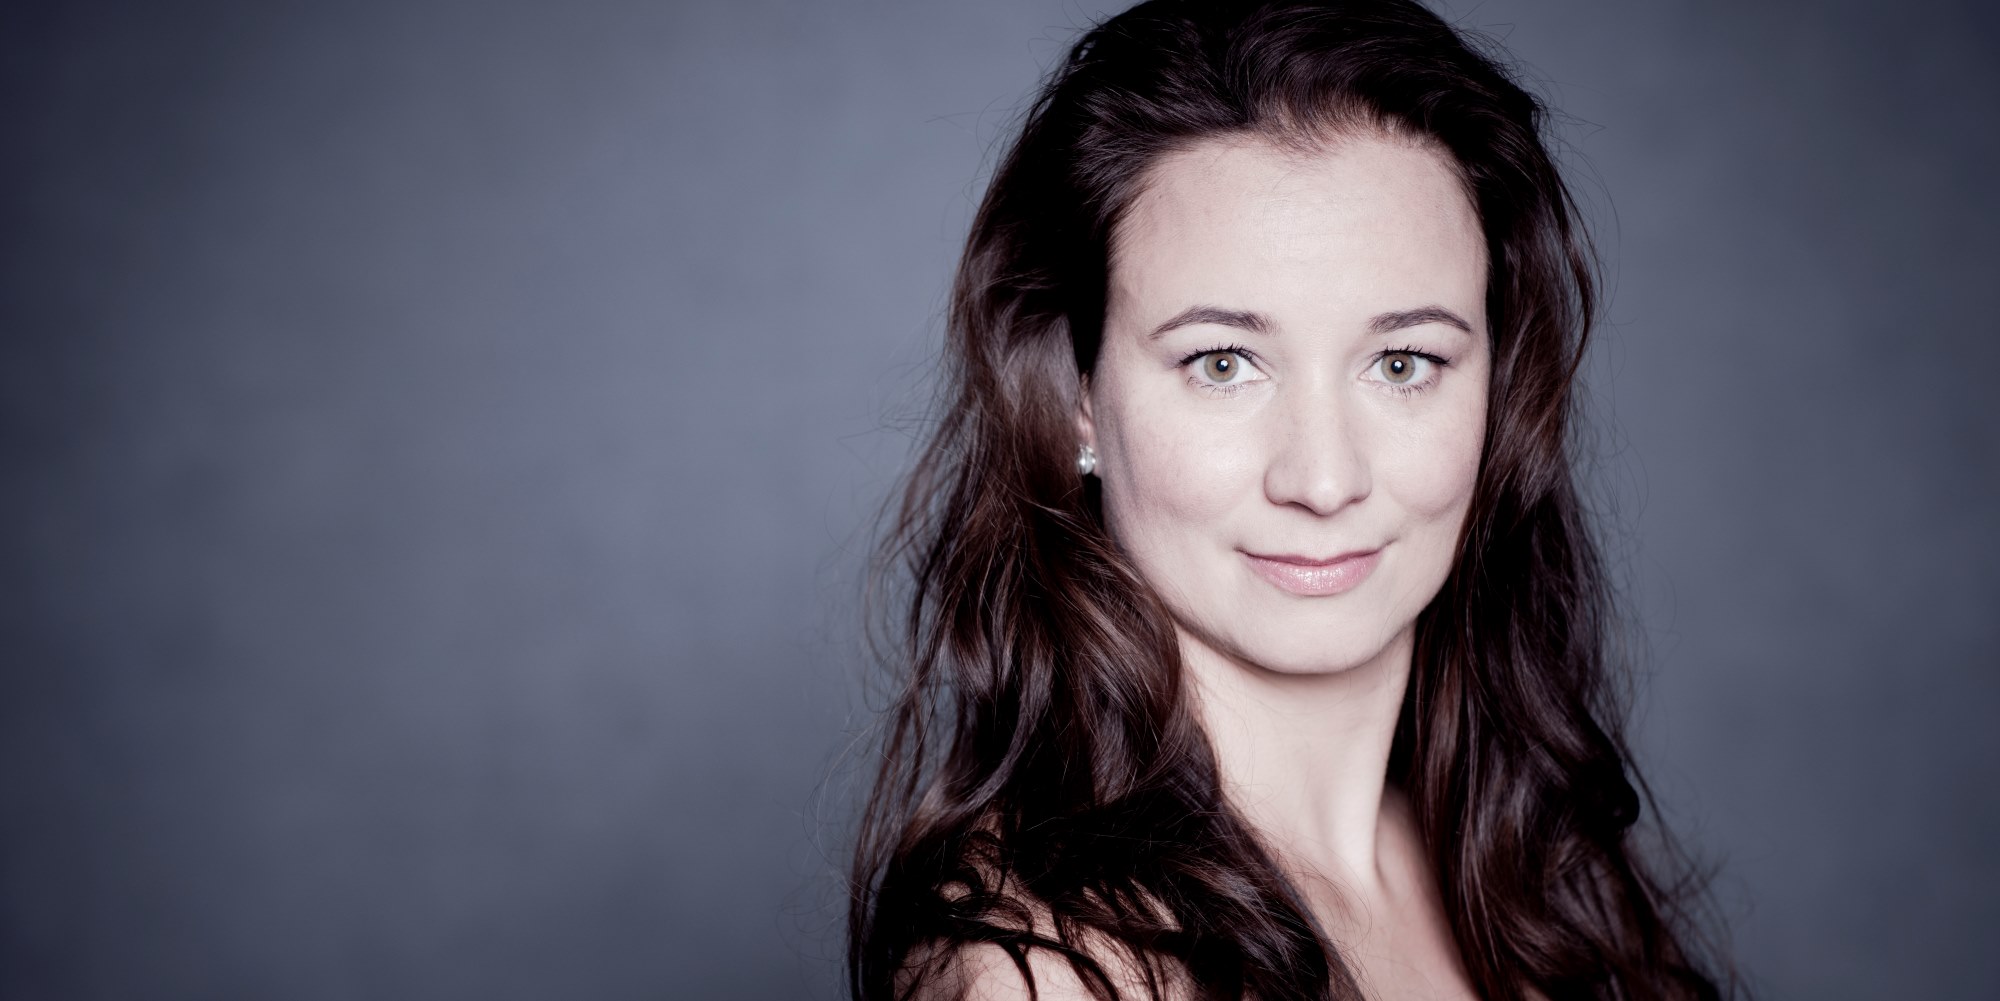 Christina Landshamer in Mahlers 4. Sinfonie